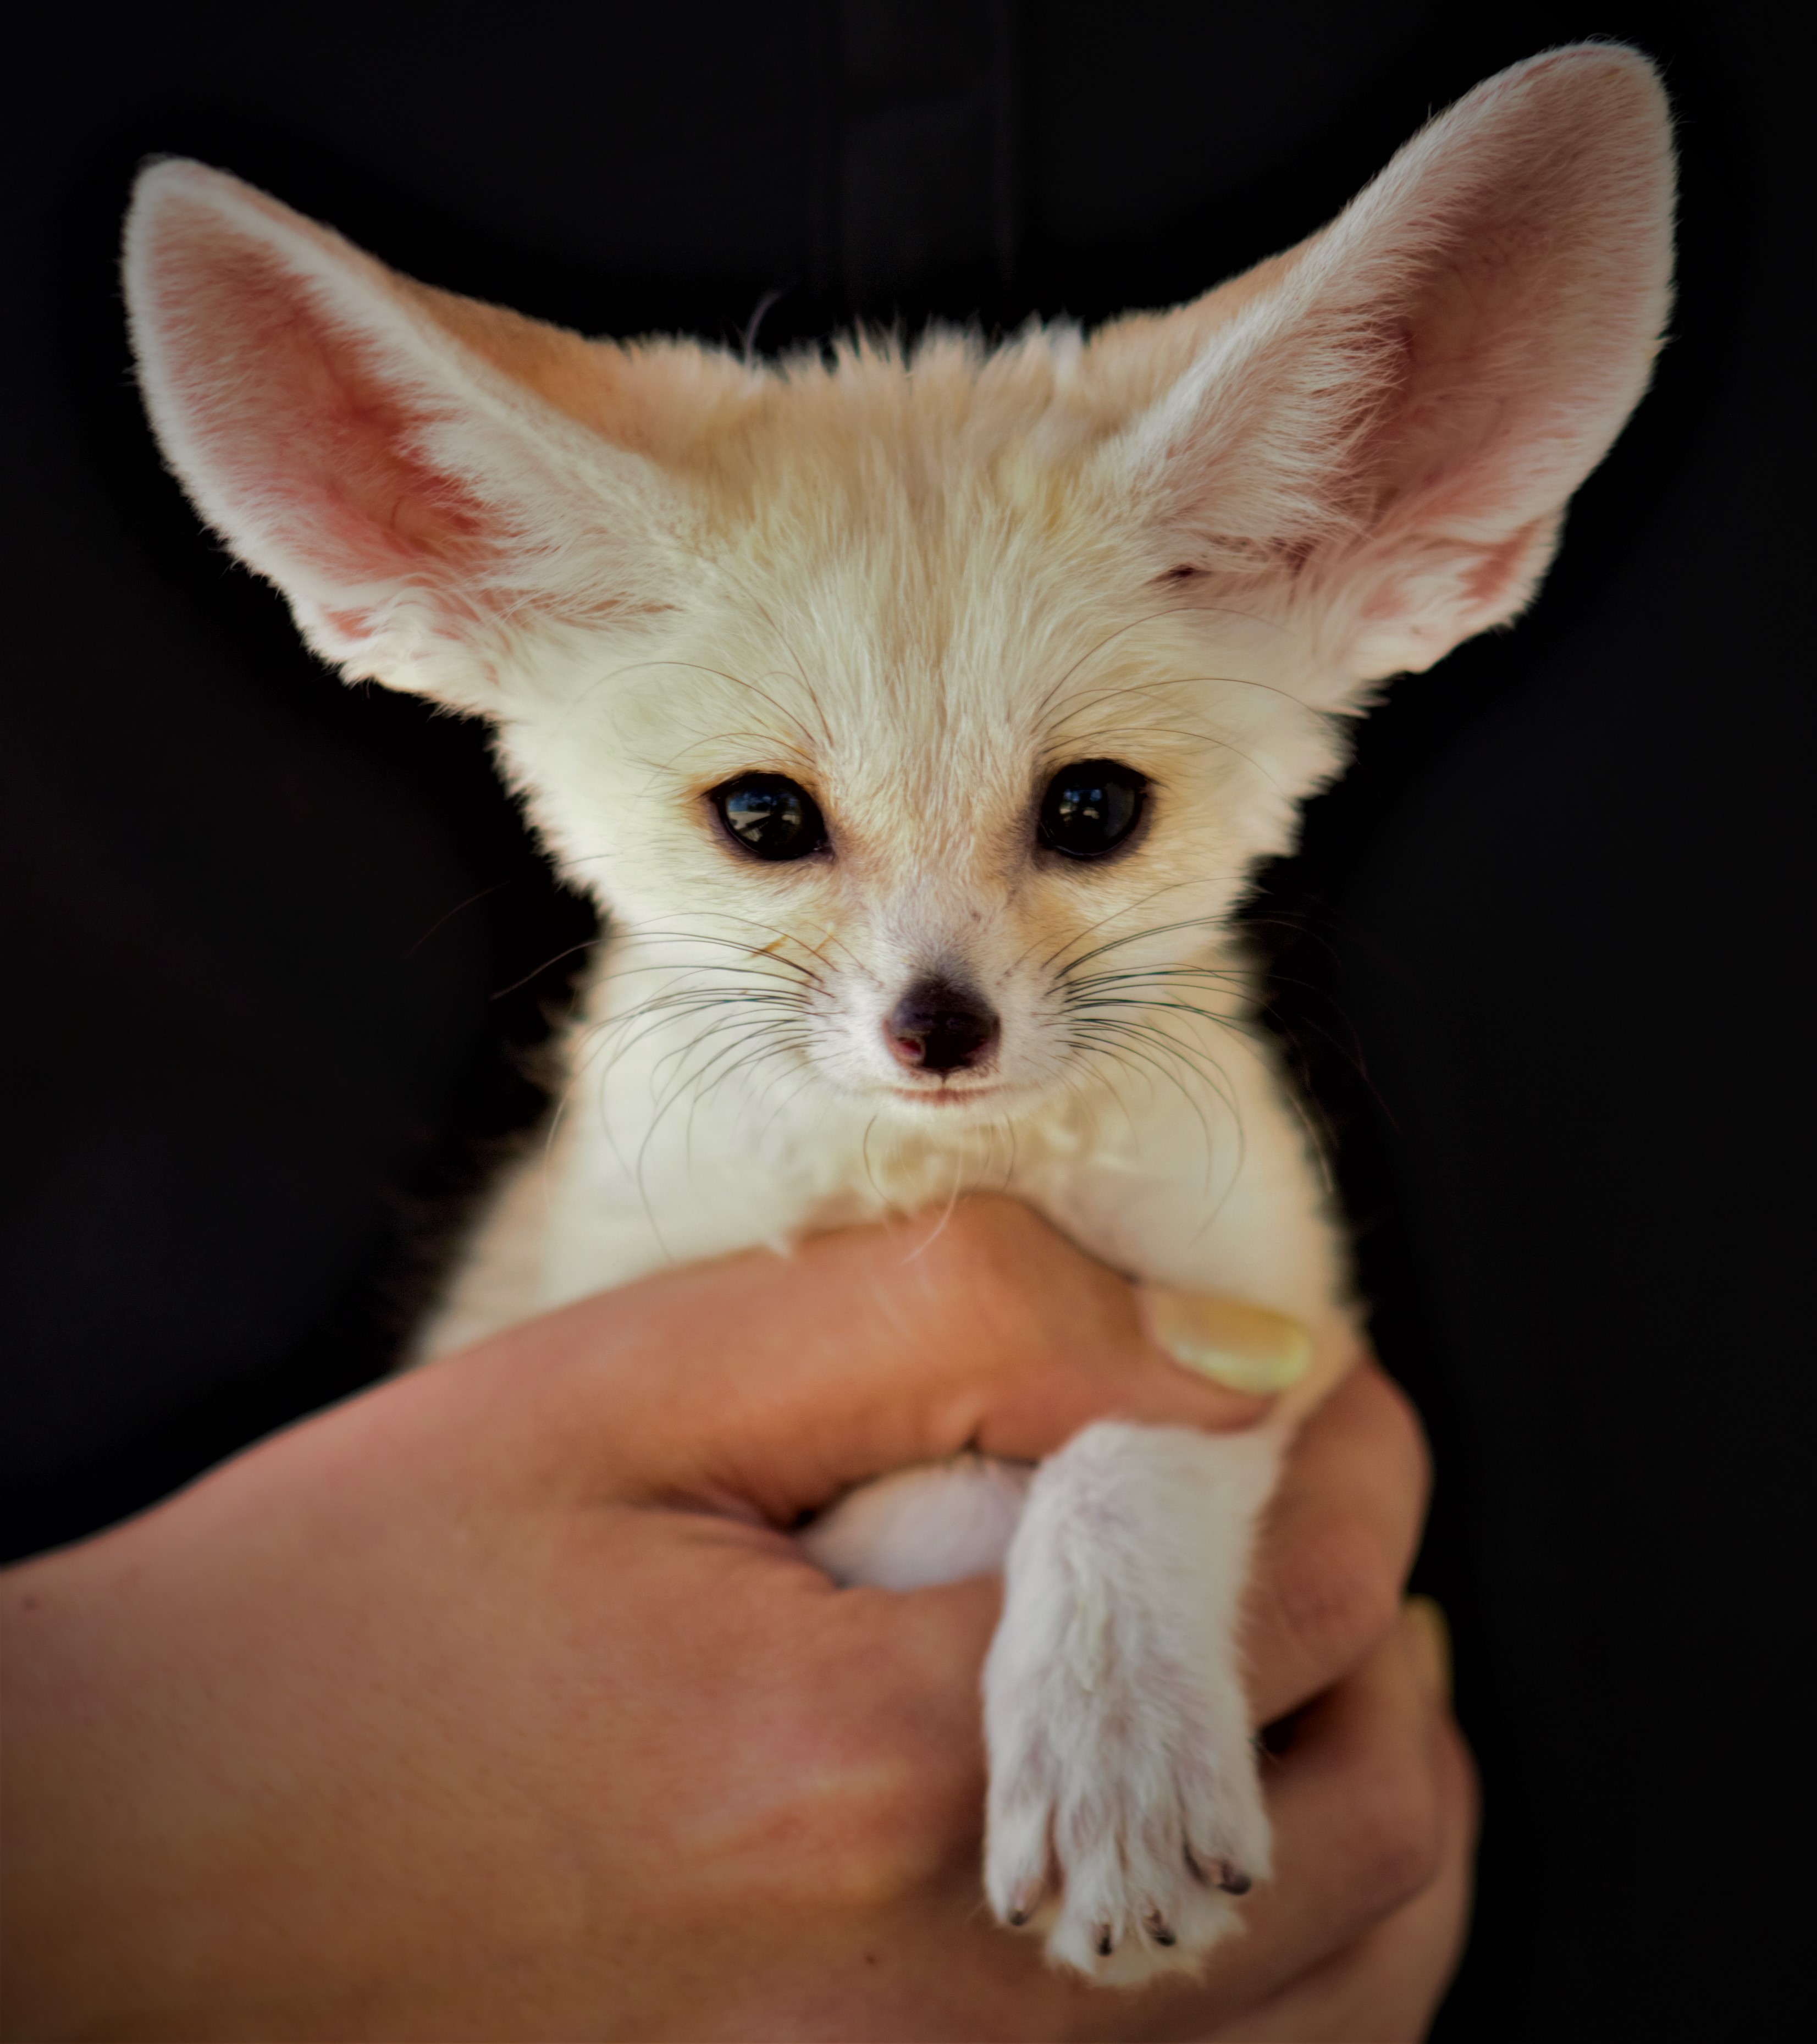 fennec fox can be a pet